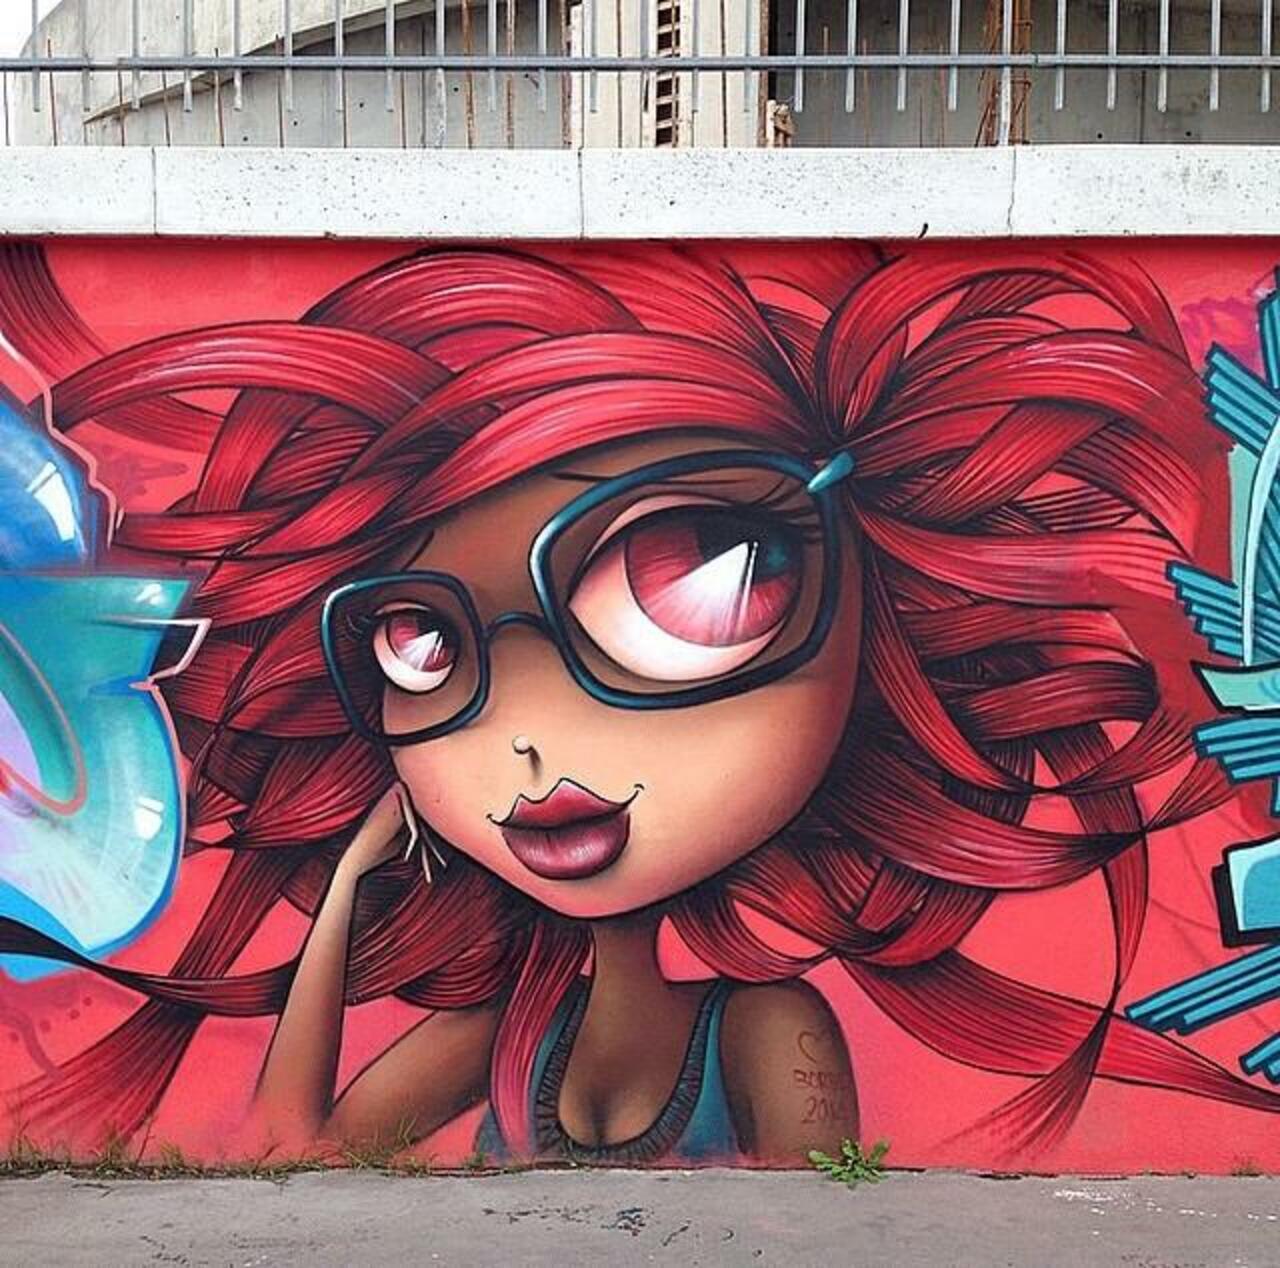 Wonderful Street Art mural by @VinieGraffiti

#art #graffiti #streetart http://t.co/BFU1Vbfpxt